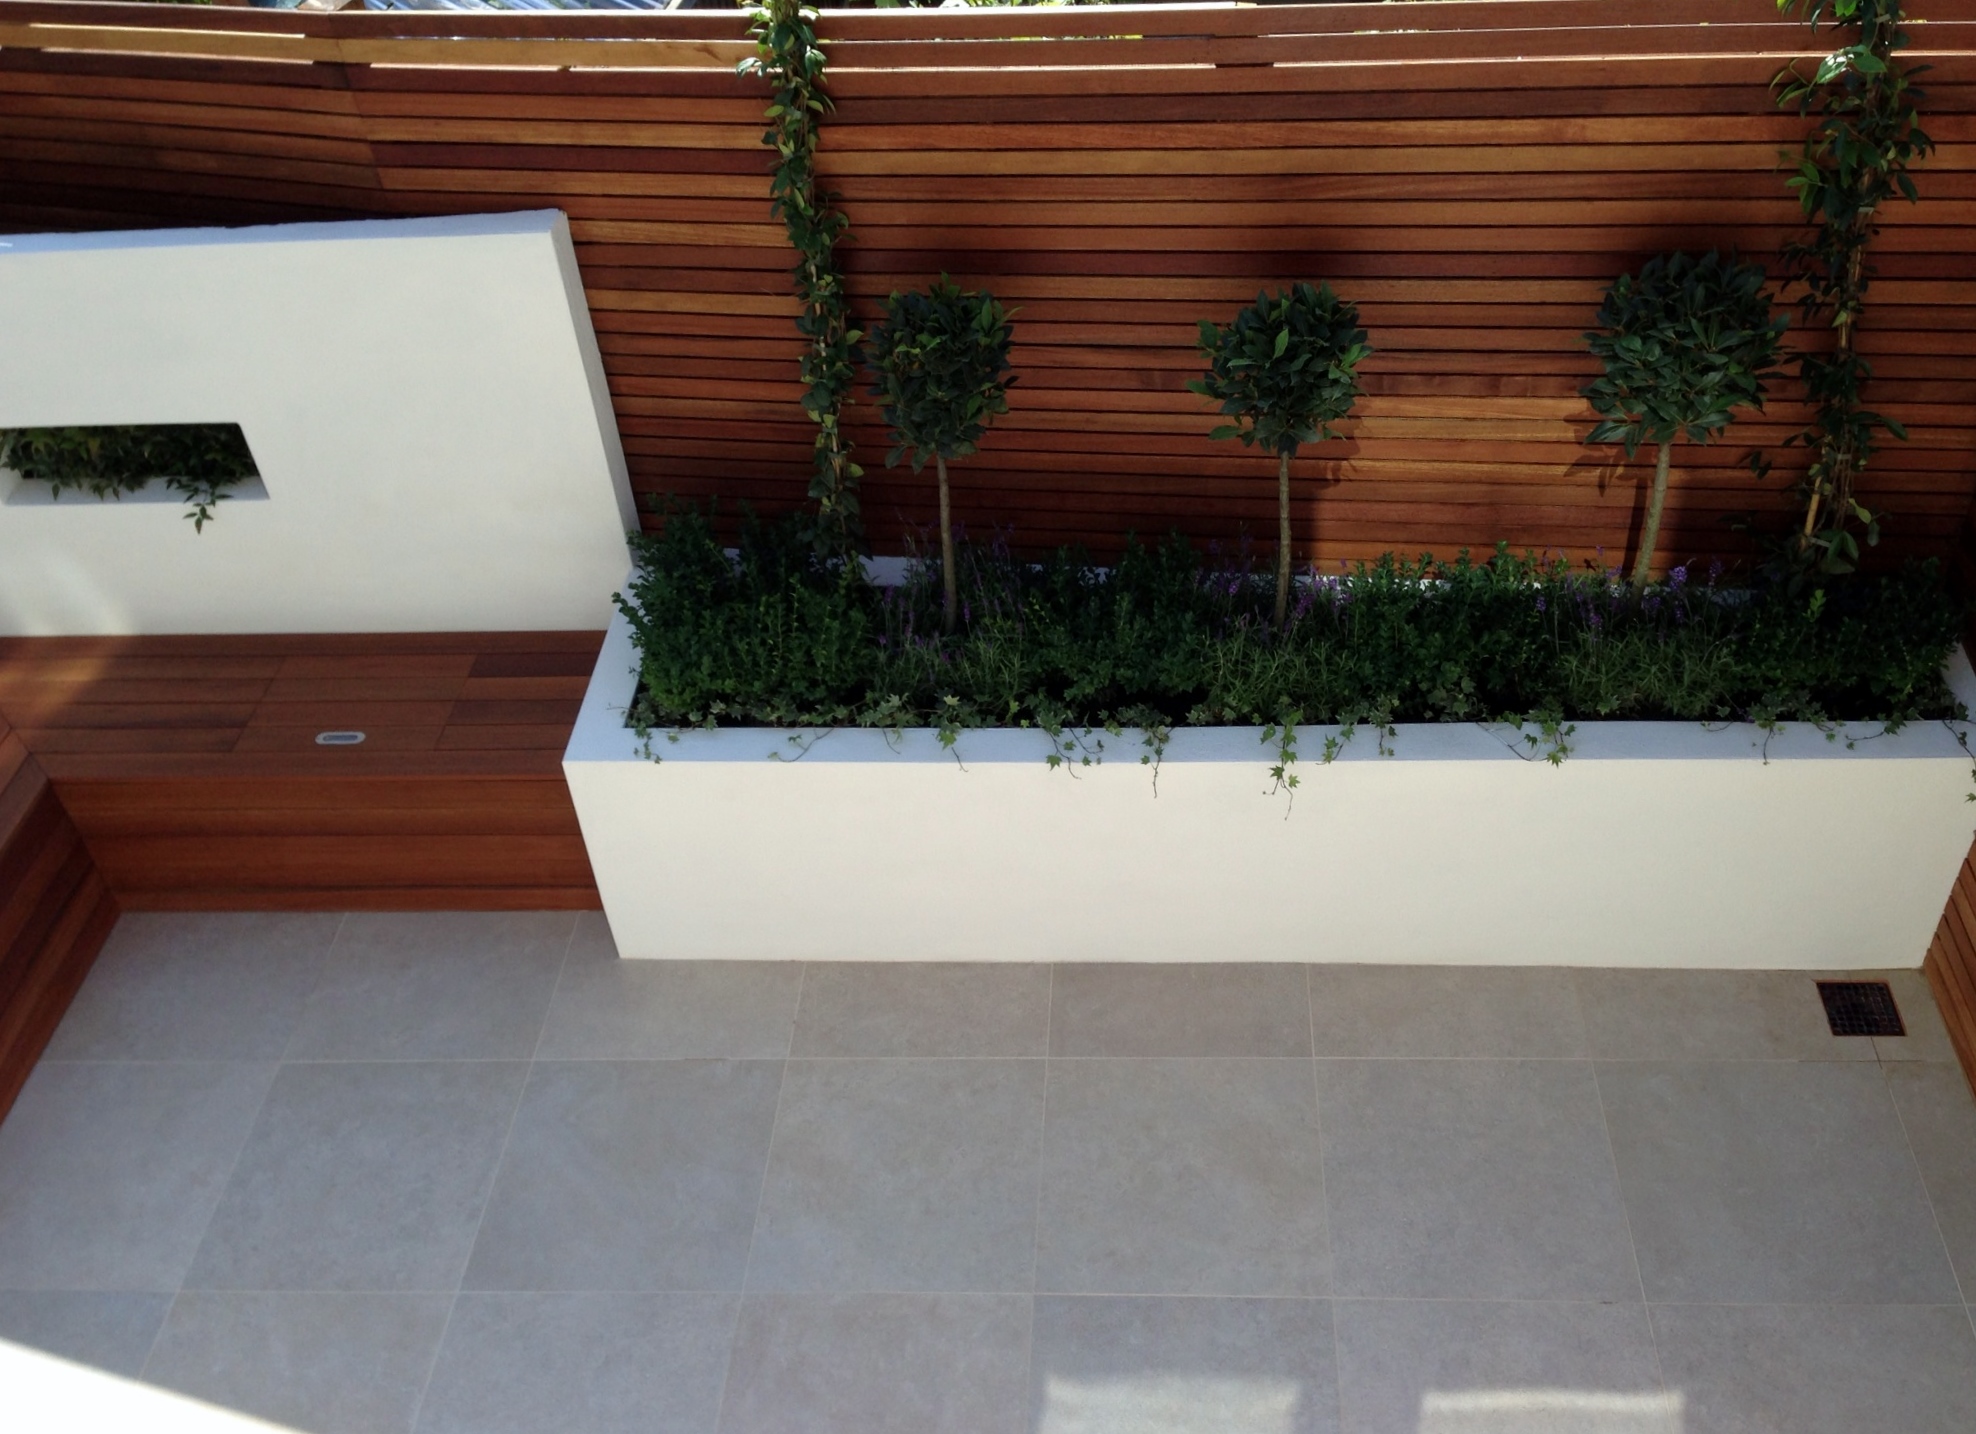 small modern minimalist low maintenance garden dulwich london block wall bench hardwood screen trellis privacy screen architectural planting (3)